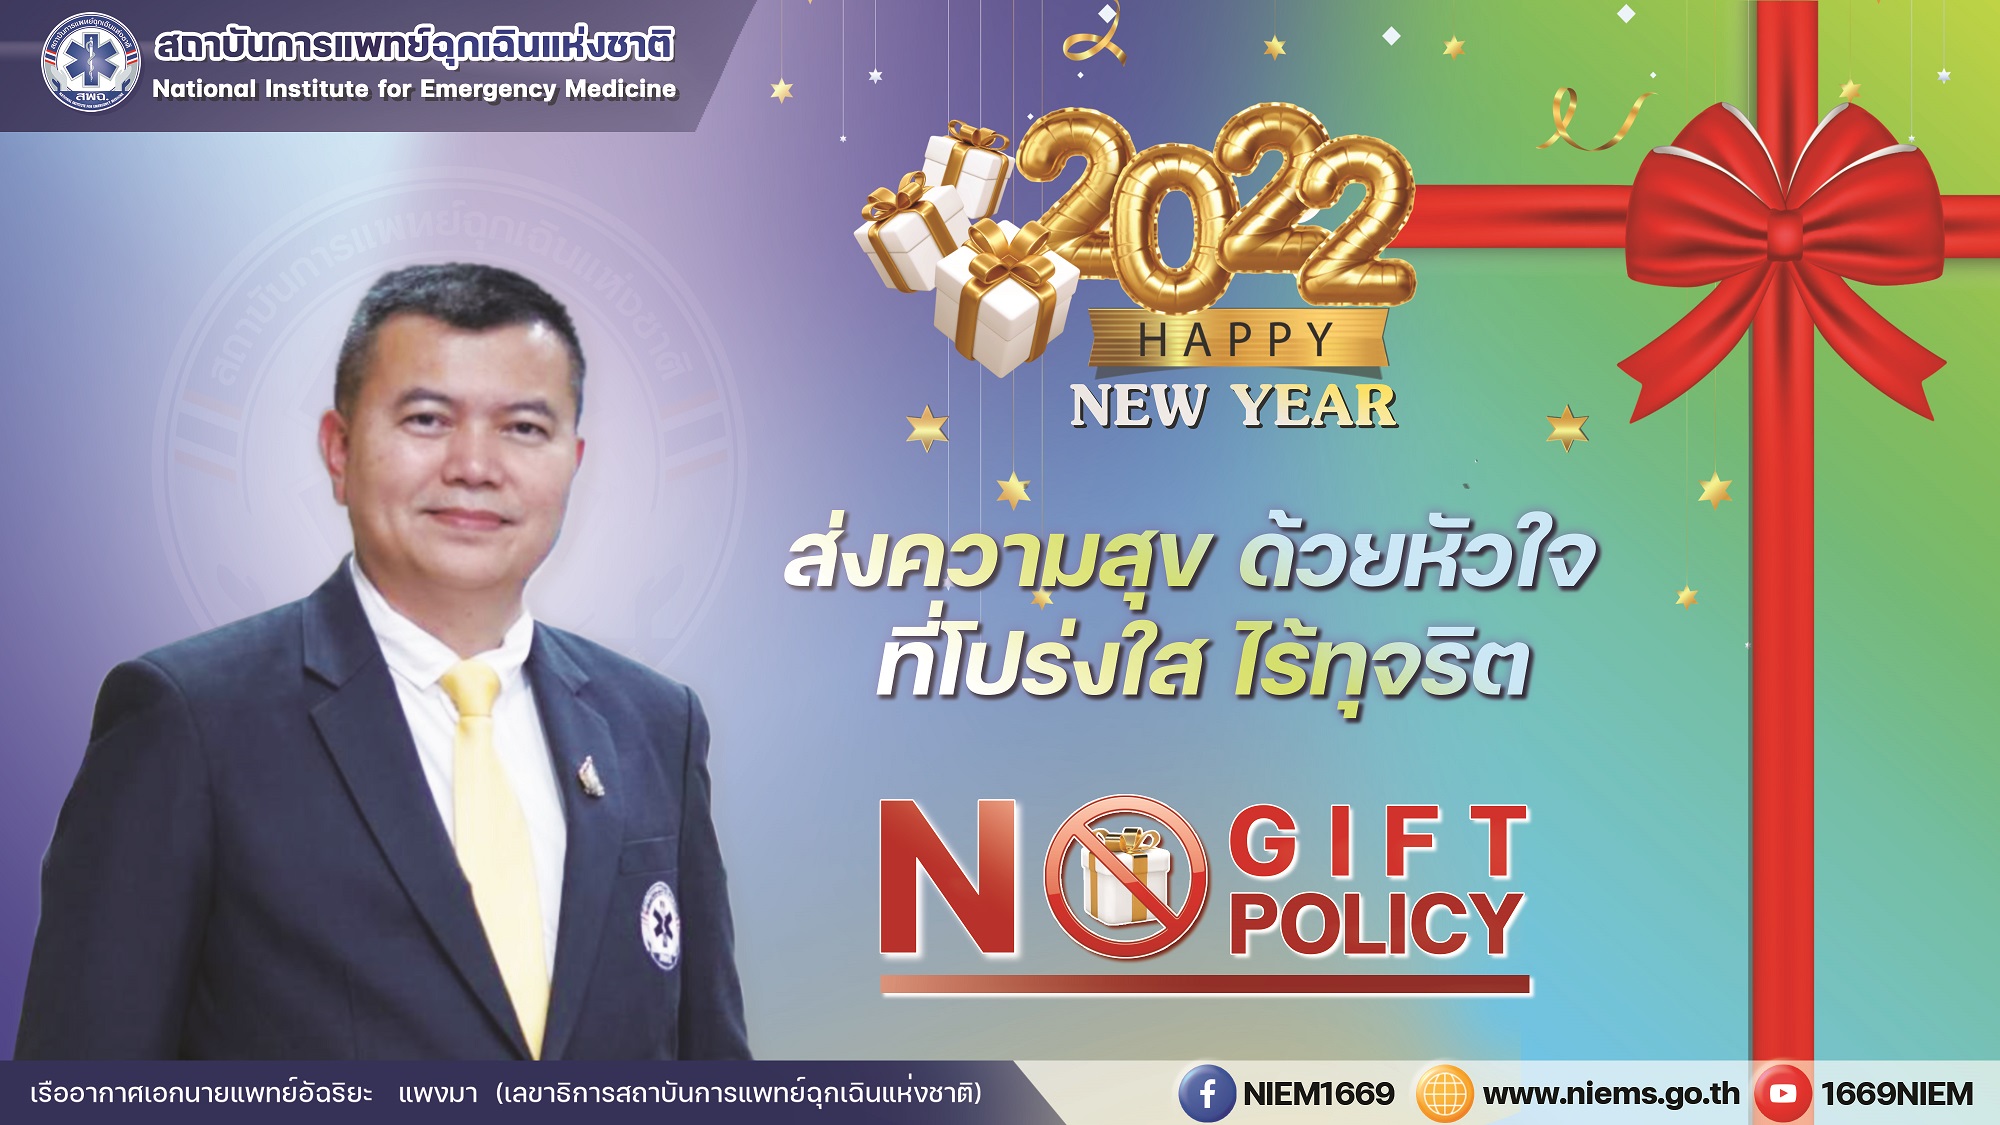 new year2022 - Nogift2.jpg